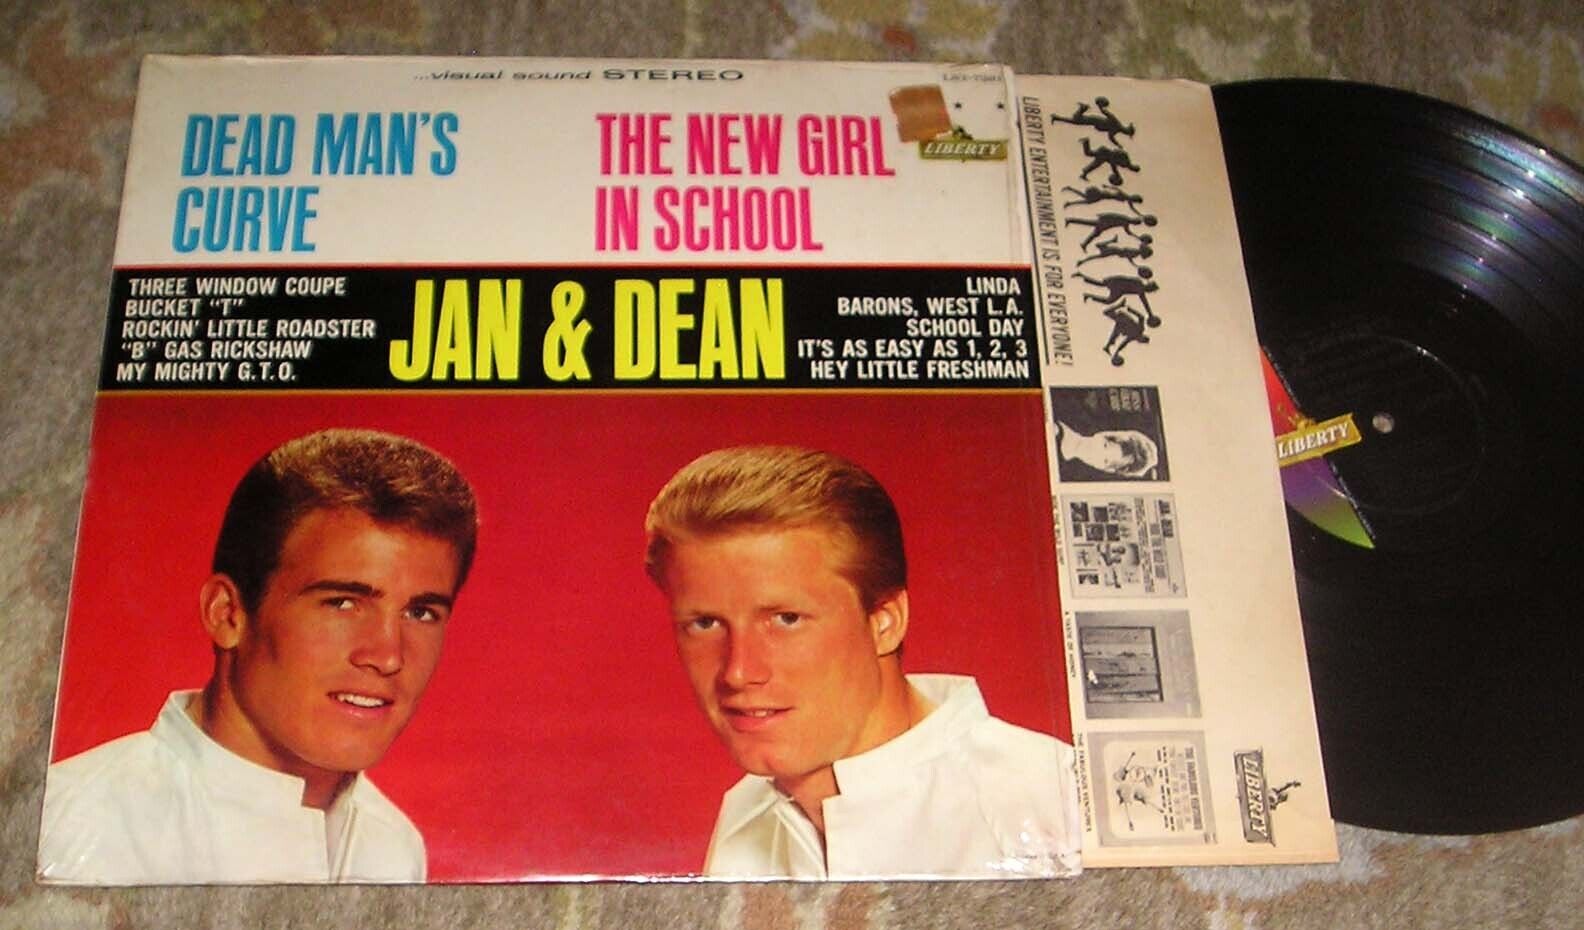 1964 Surf Rock LP - JAN & DEAN "Dead Man's Curve" LIBERTY RECORDS Stereo Shrink